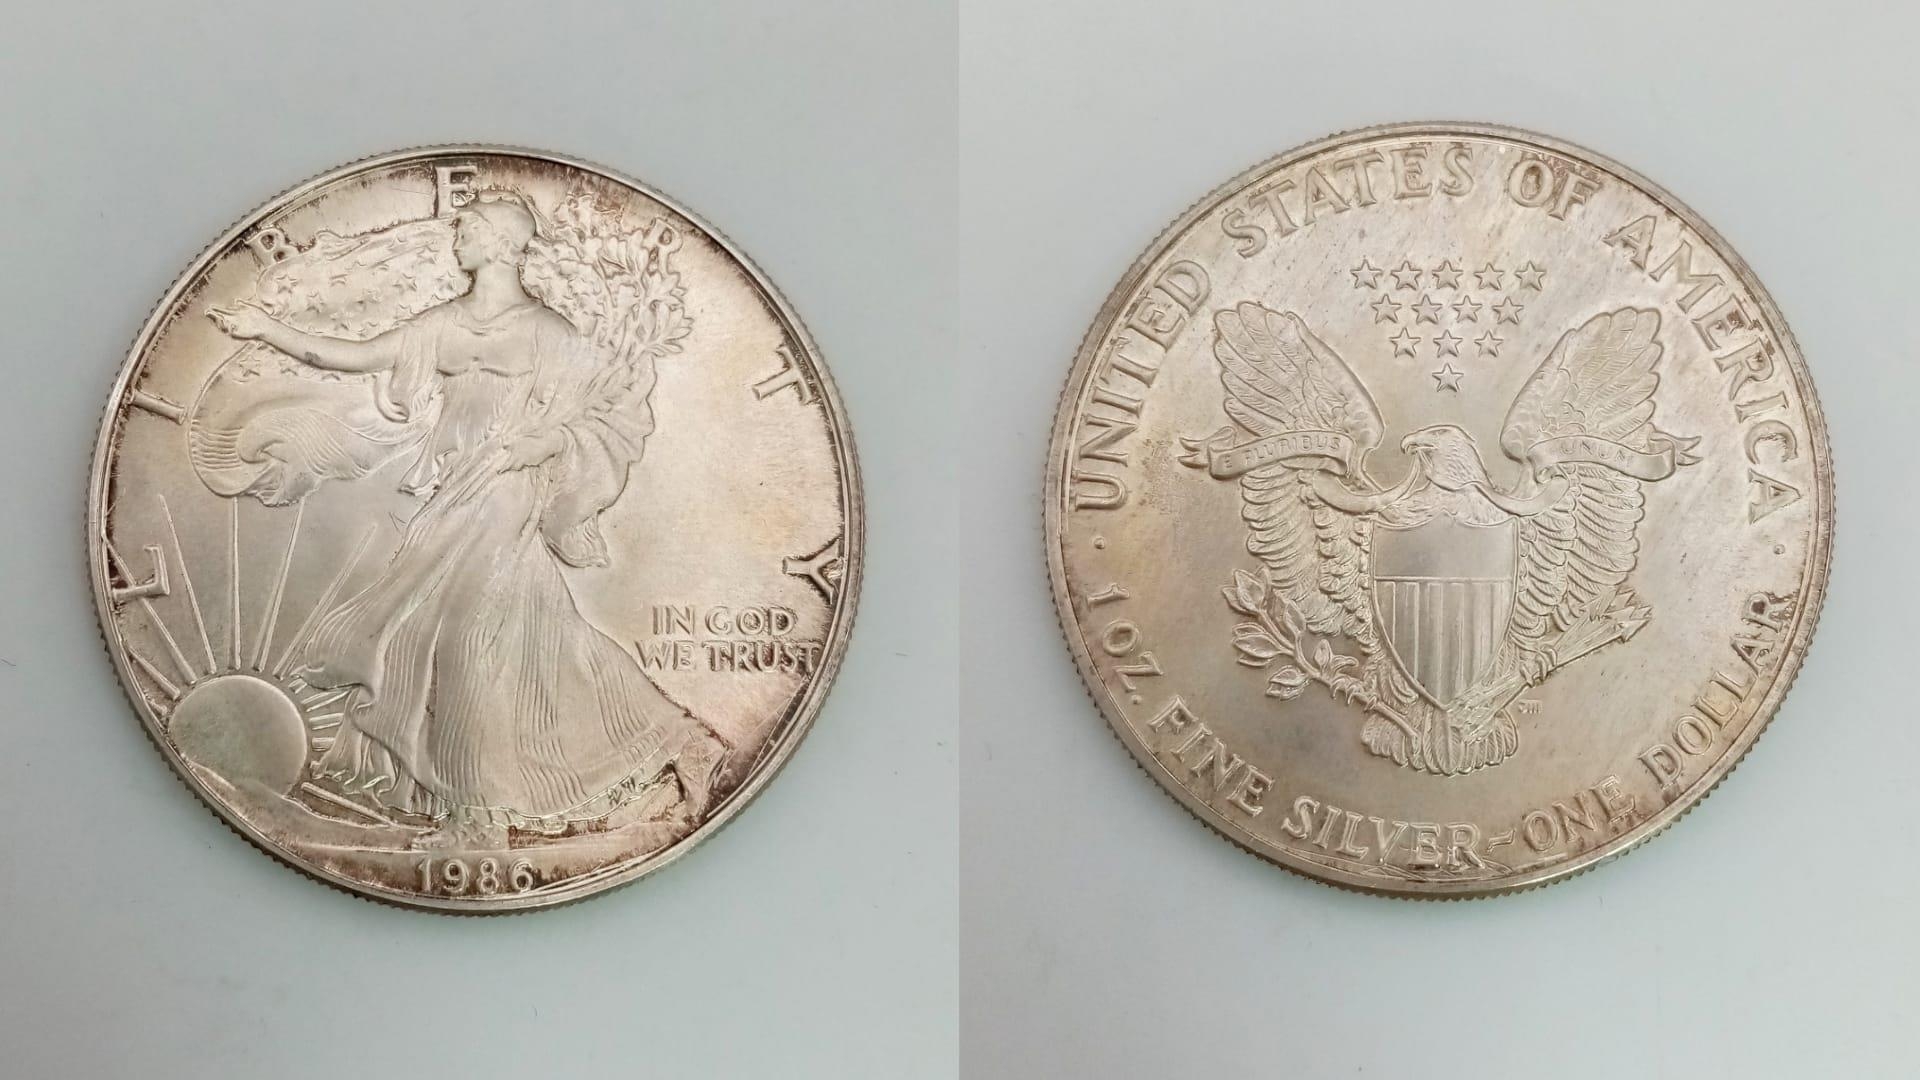 A USA 1986 Silver One Dollar Coin. 31.4g. In original presentation box.